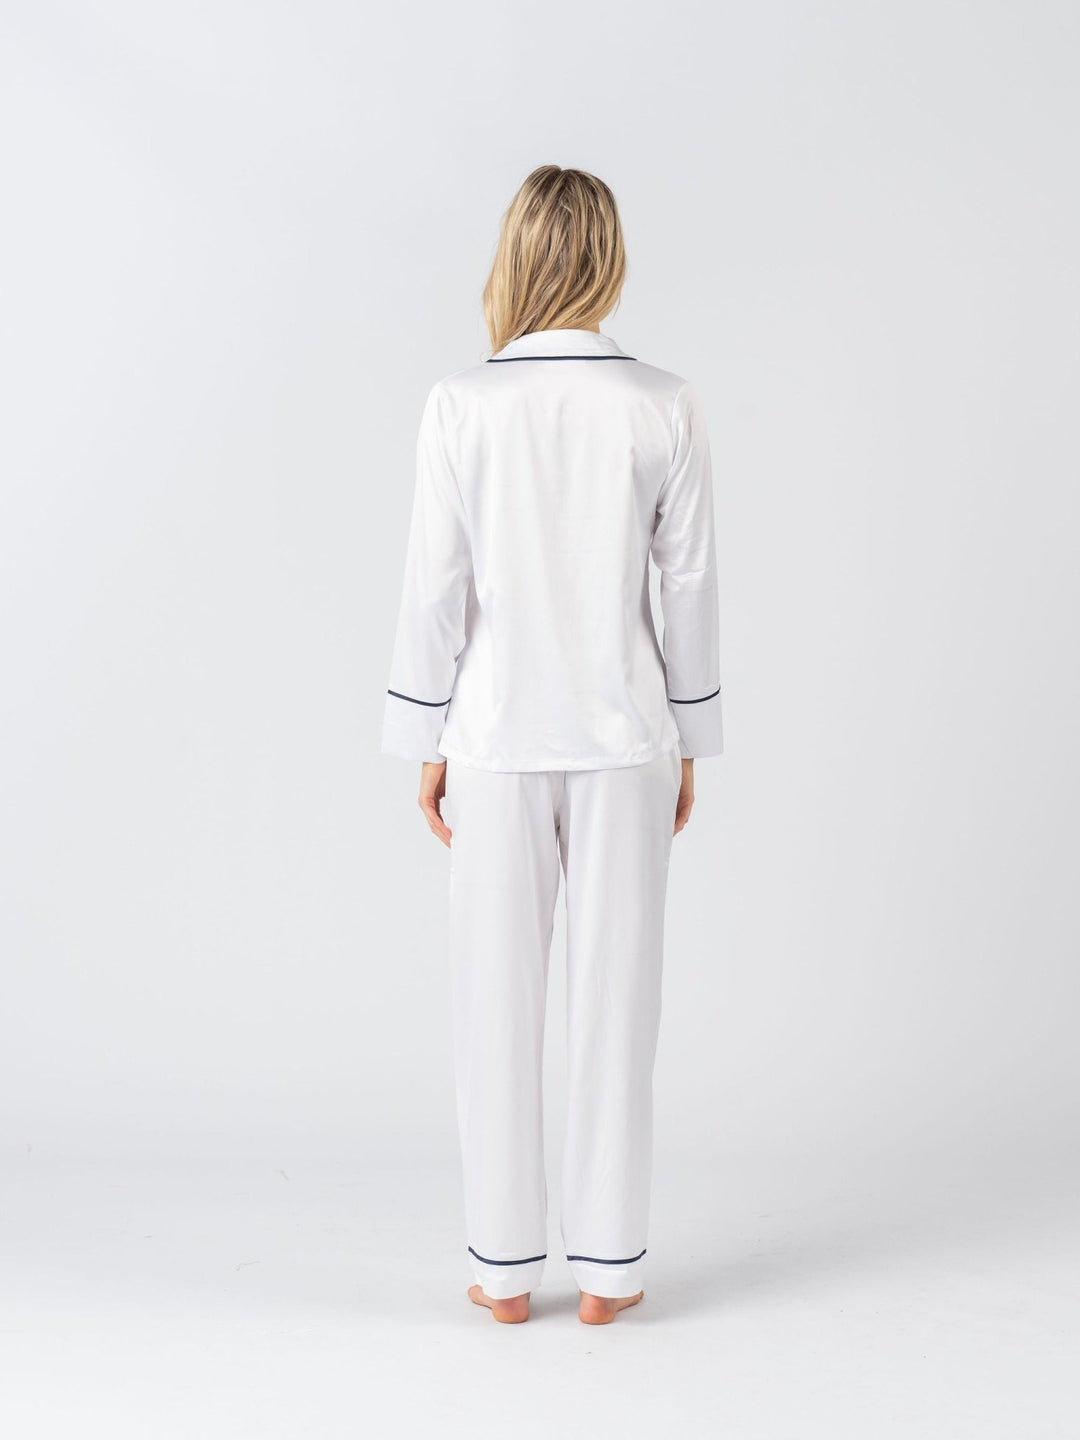 Satin Personalised Pyjama Winter Set - Long Sleeve & Long Pants White/Navy